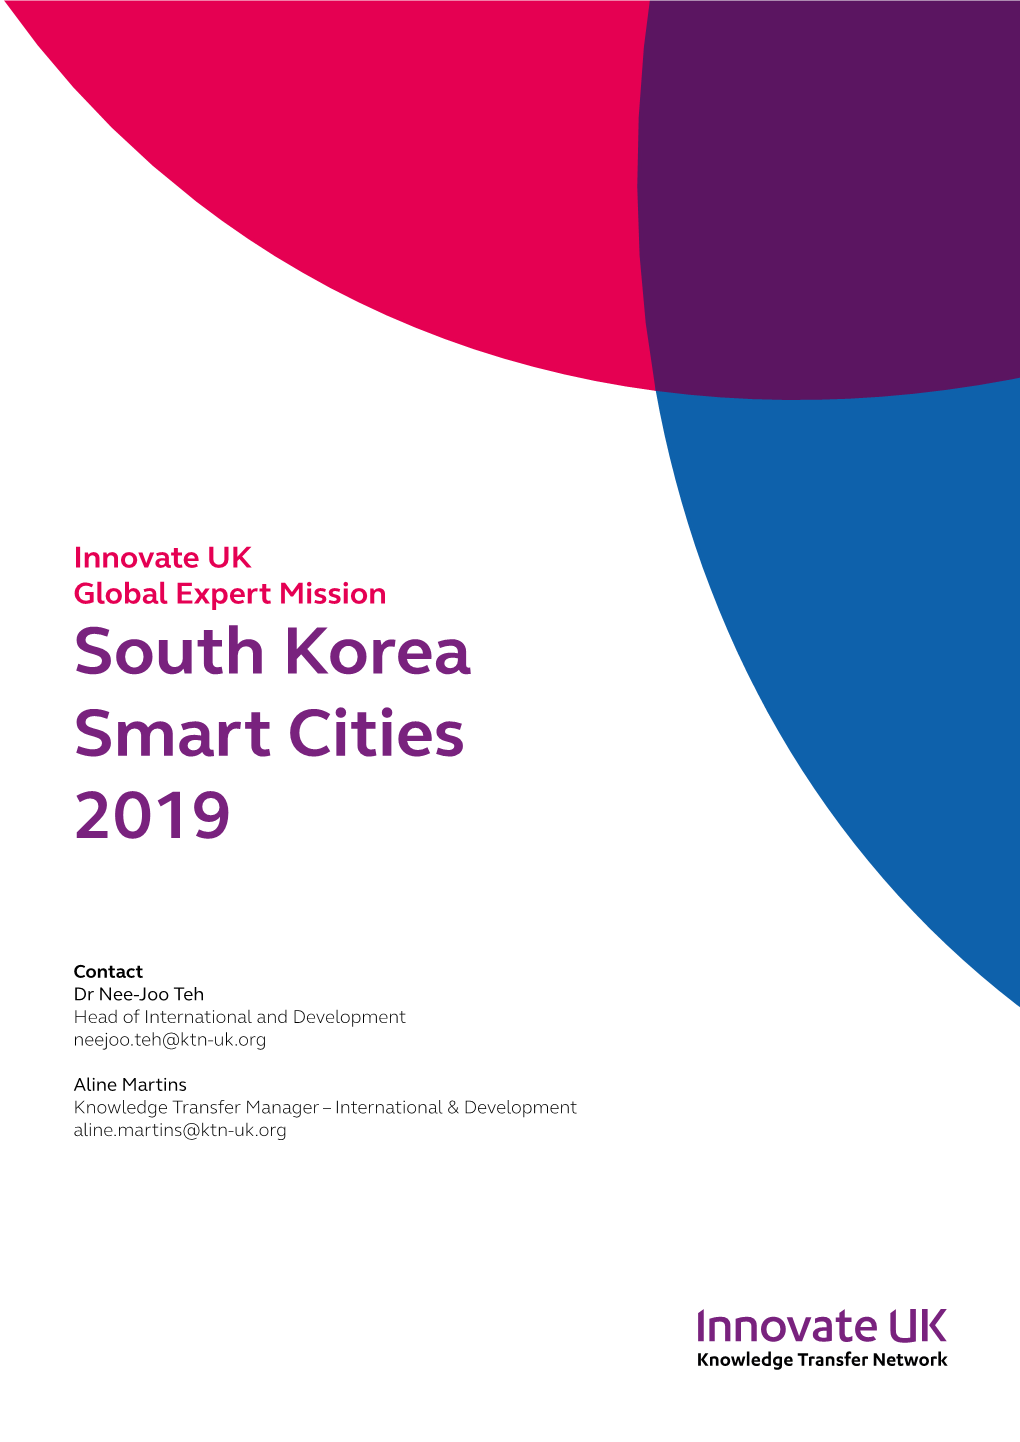 South Korea Smart Cities 2019